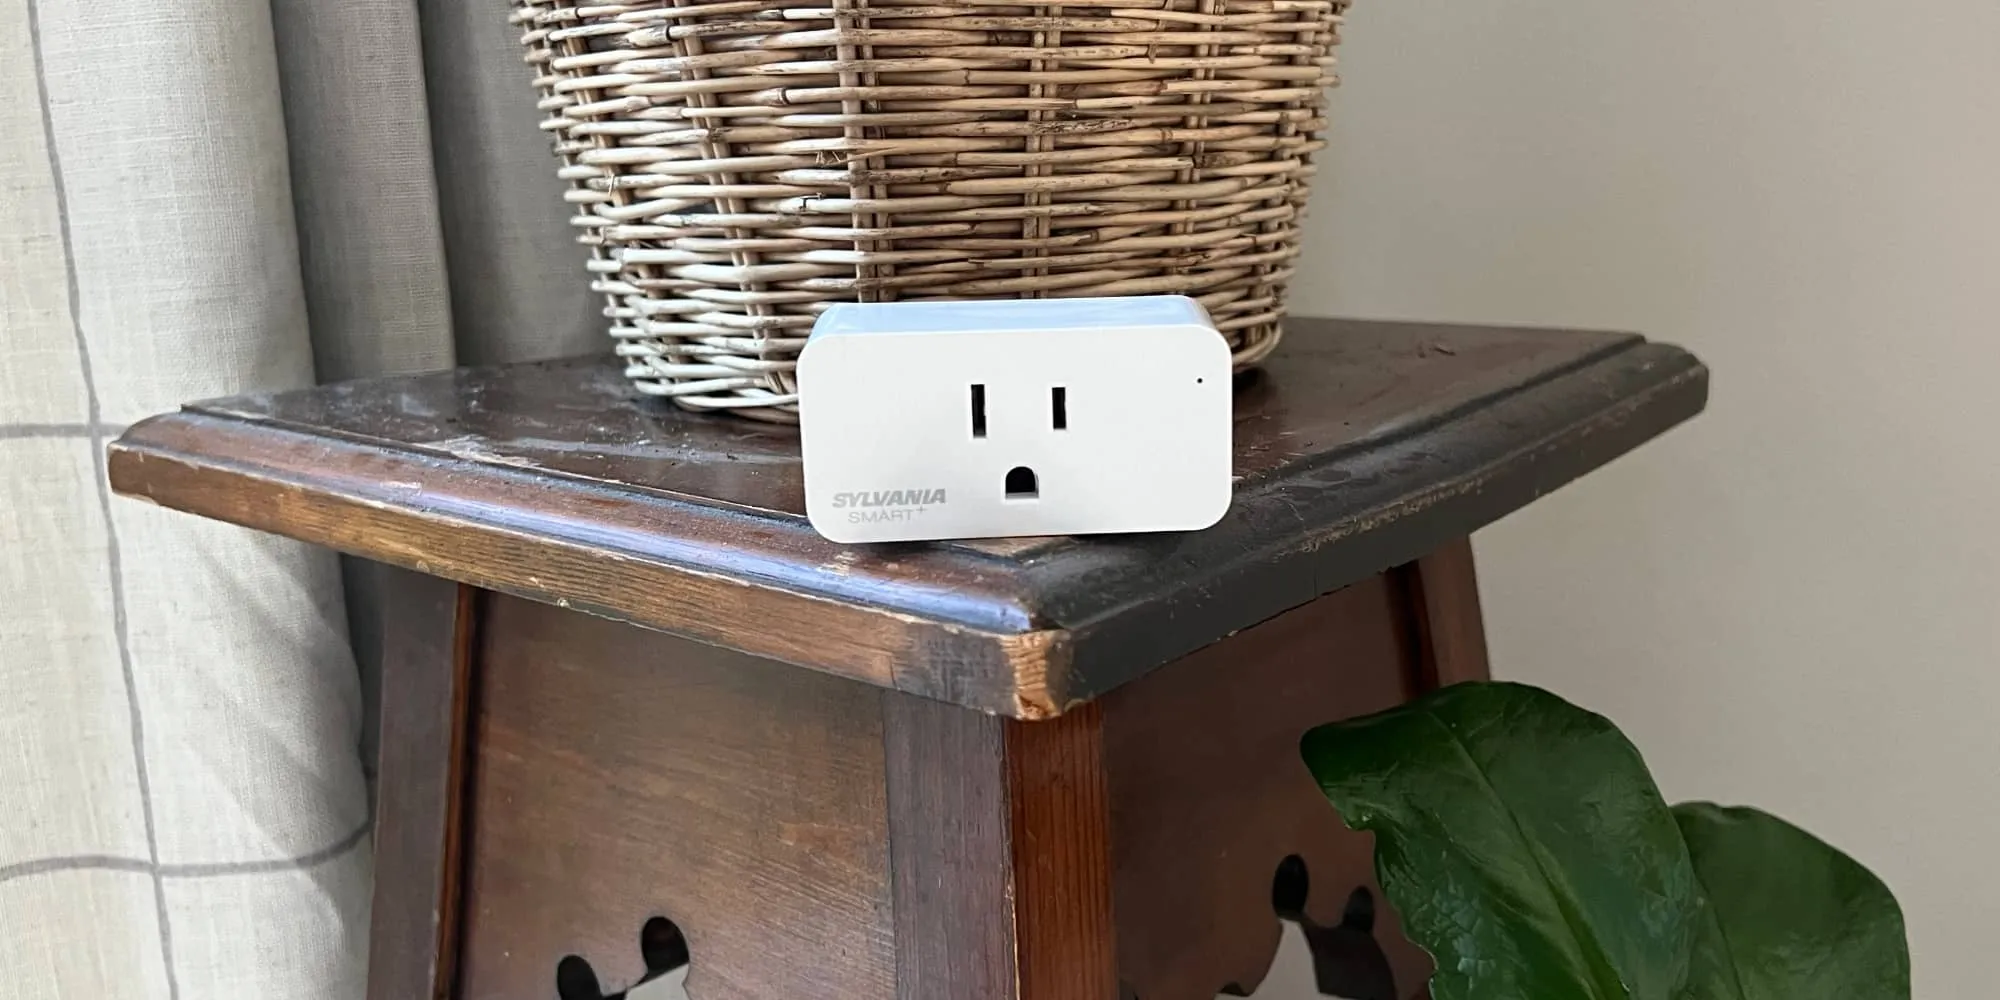 Smart Plug Mini 15A WiFi Outlet Compatible Function ETL HBN